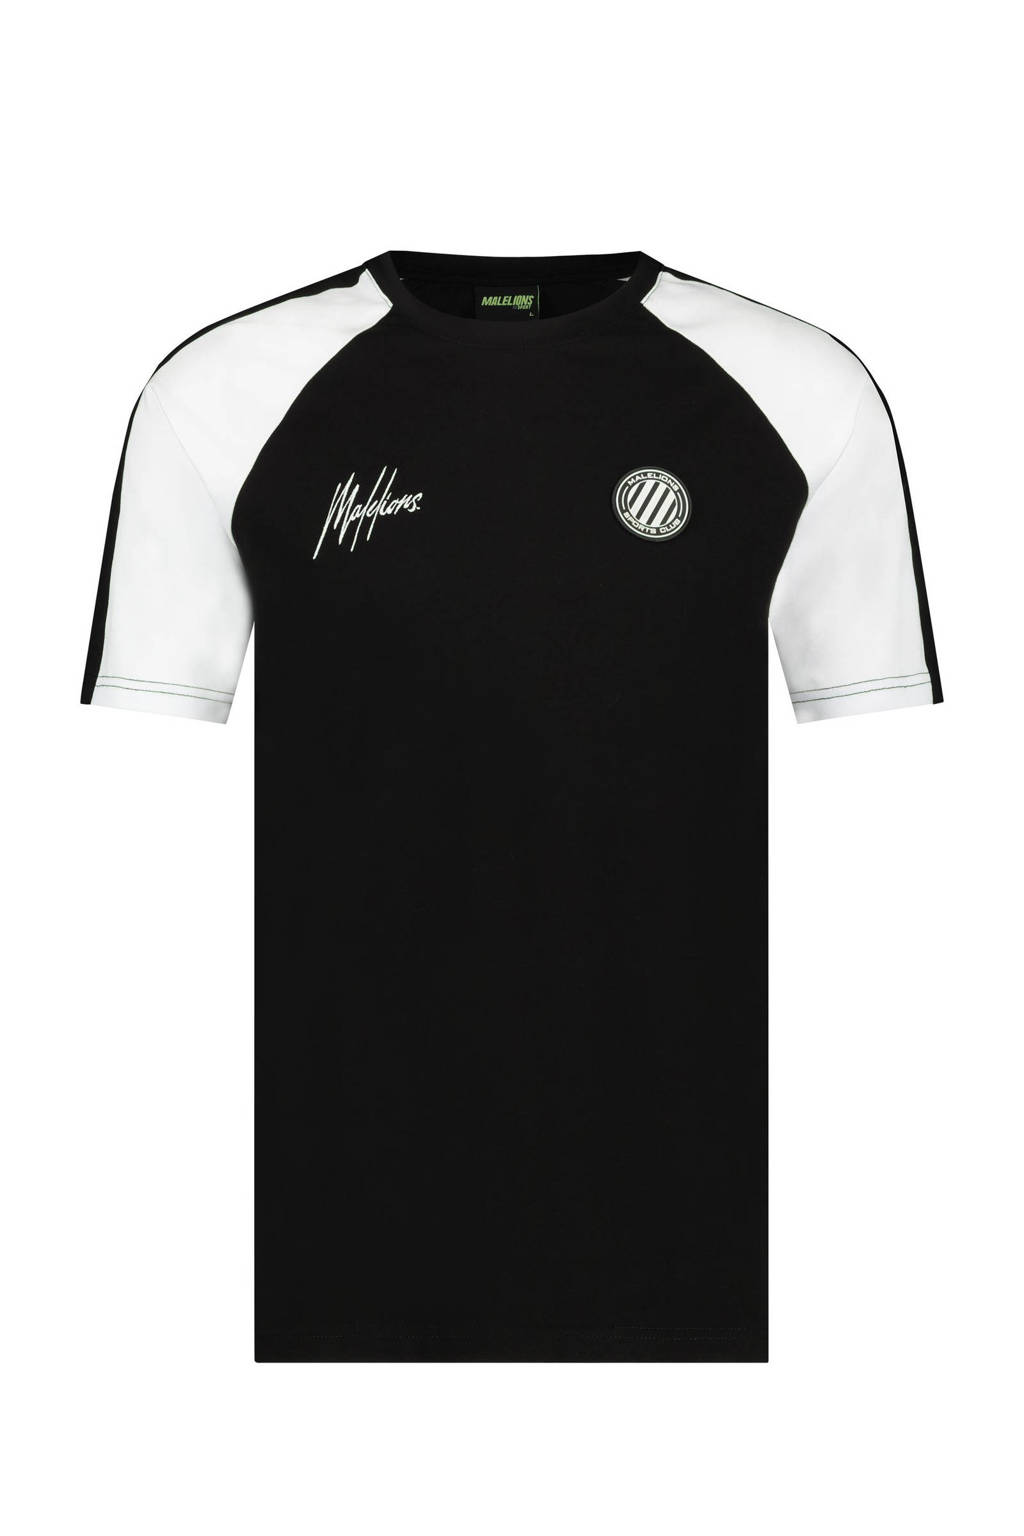 Malelions T-shirt Striker met logo zwart/wit, Zwart/wit